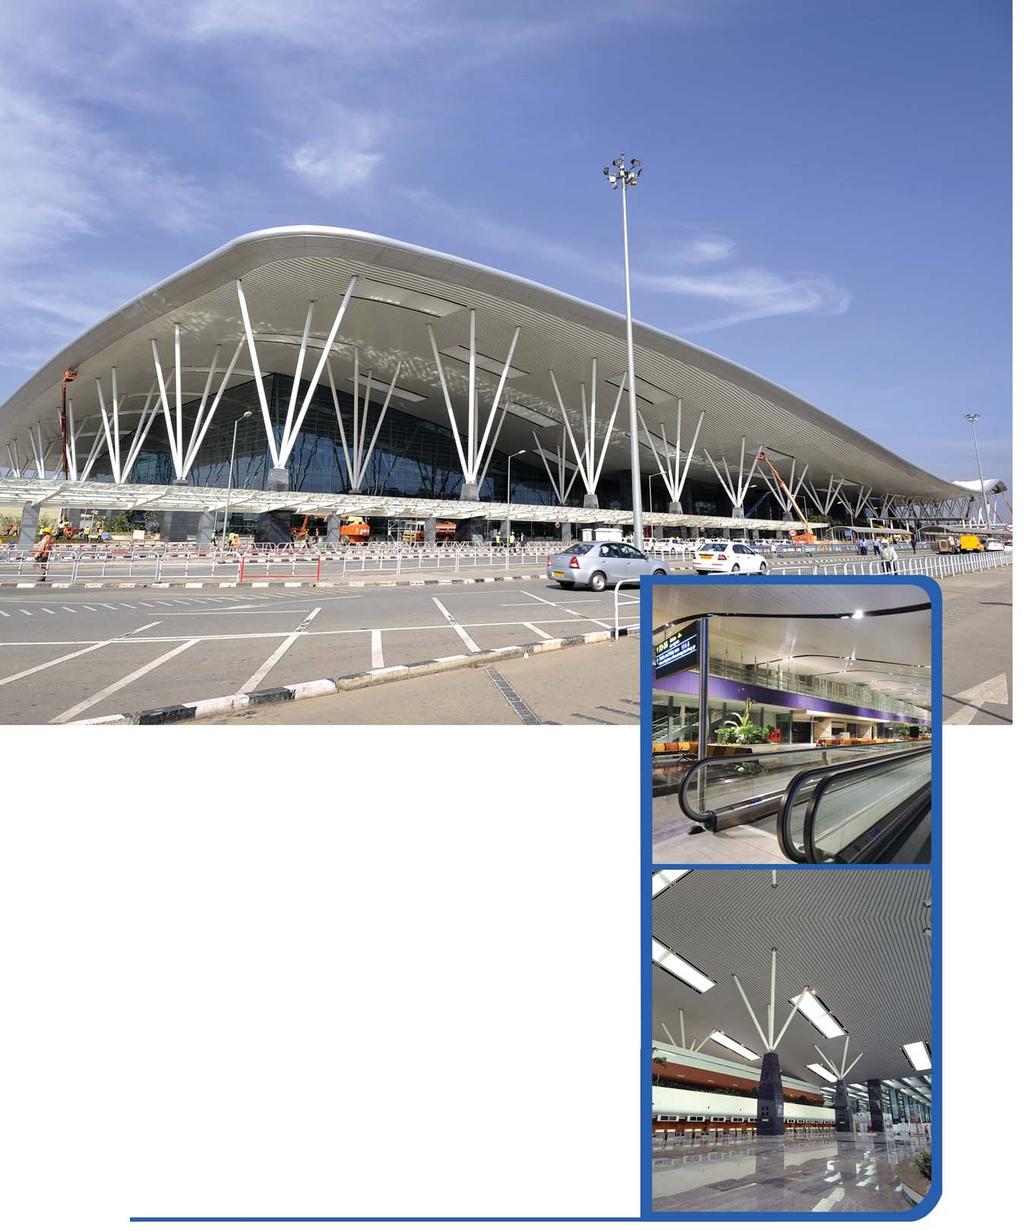 Bengaluru International Airport This issue of people profile in ECC News focuses on Team L&T at Bengaluru International Airport project.